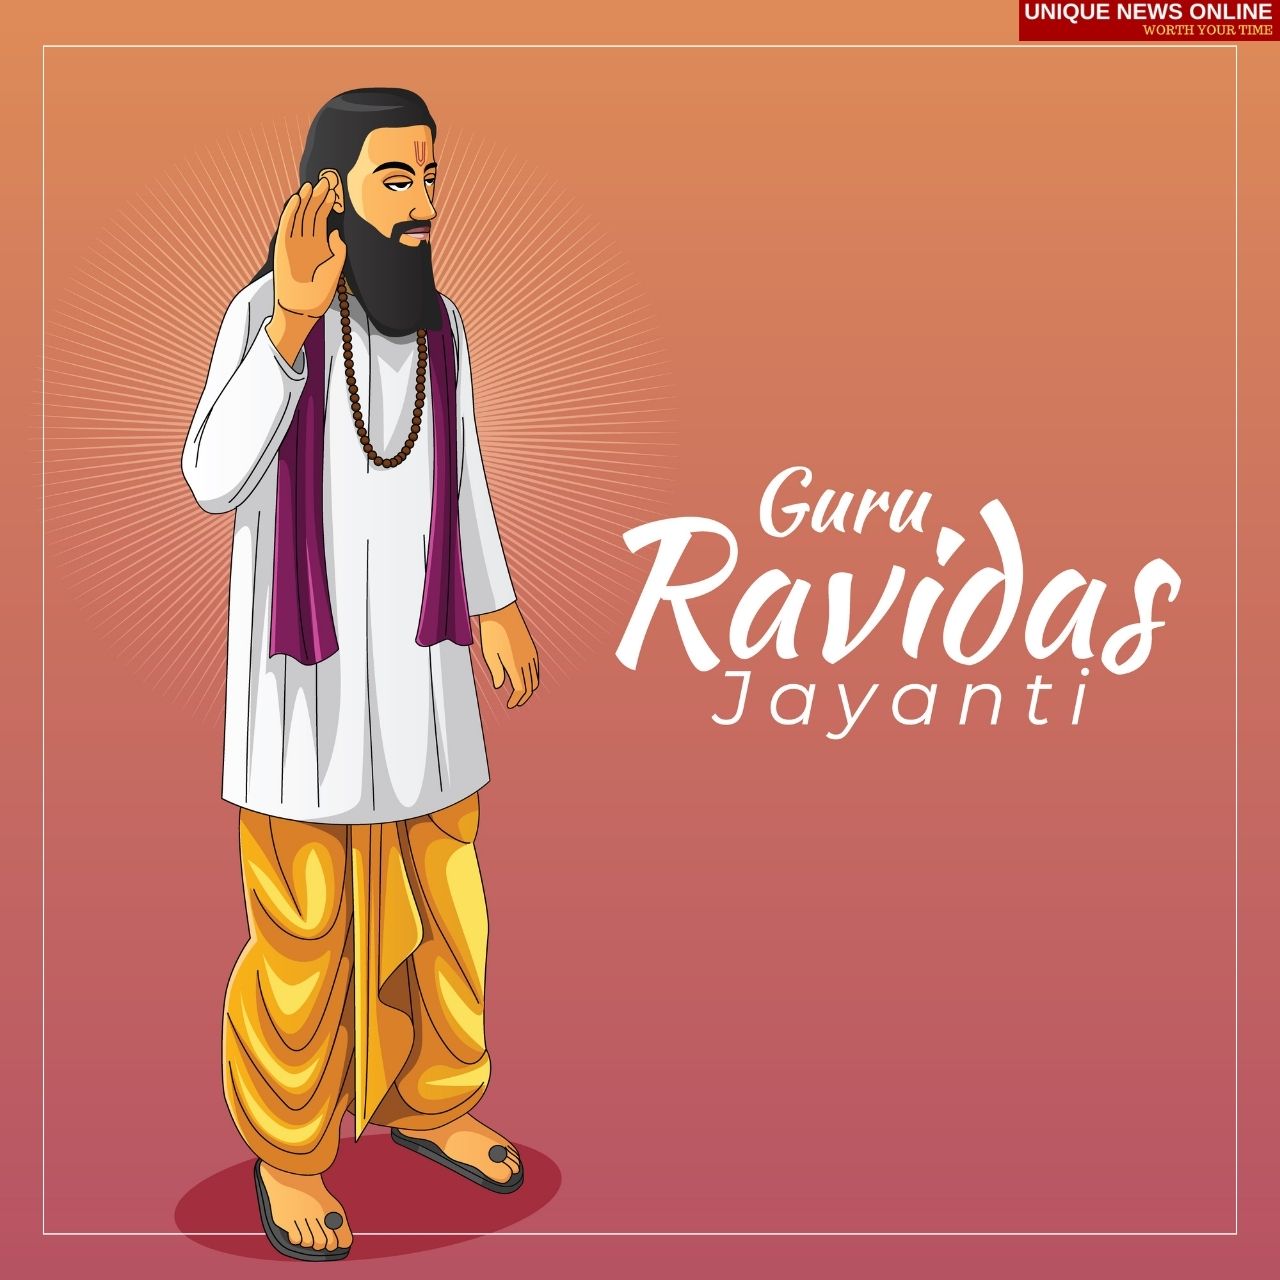 Guru Ravidas Jayanti 2022 Wishes, Greetings, HD Images, Messages, Wallpaper,  Quotes, Shayari, and WhatsApp Status Video to Share